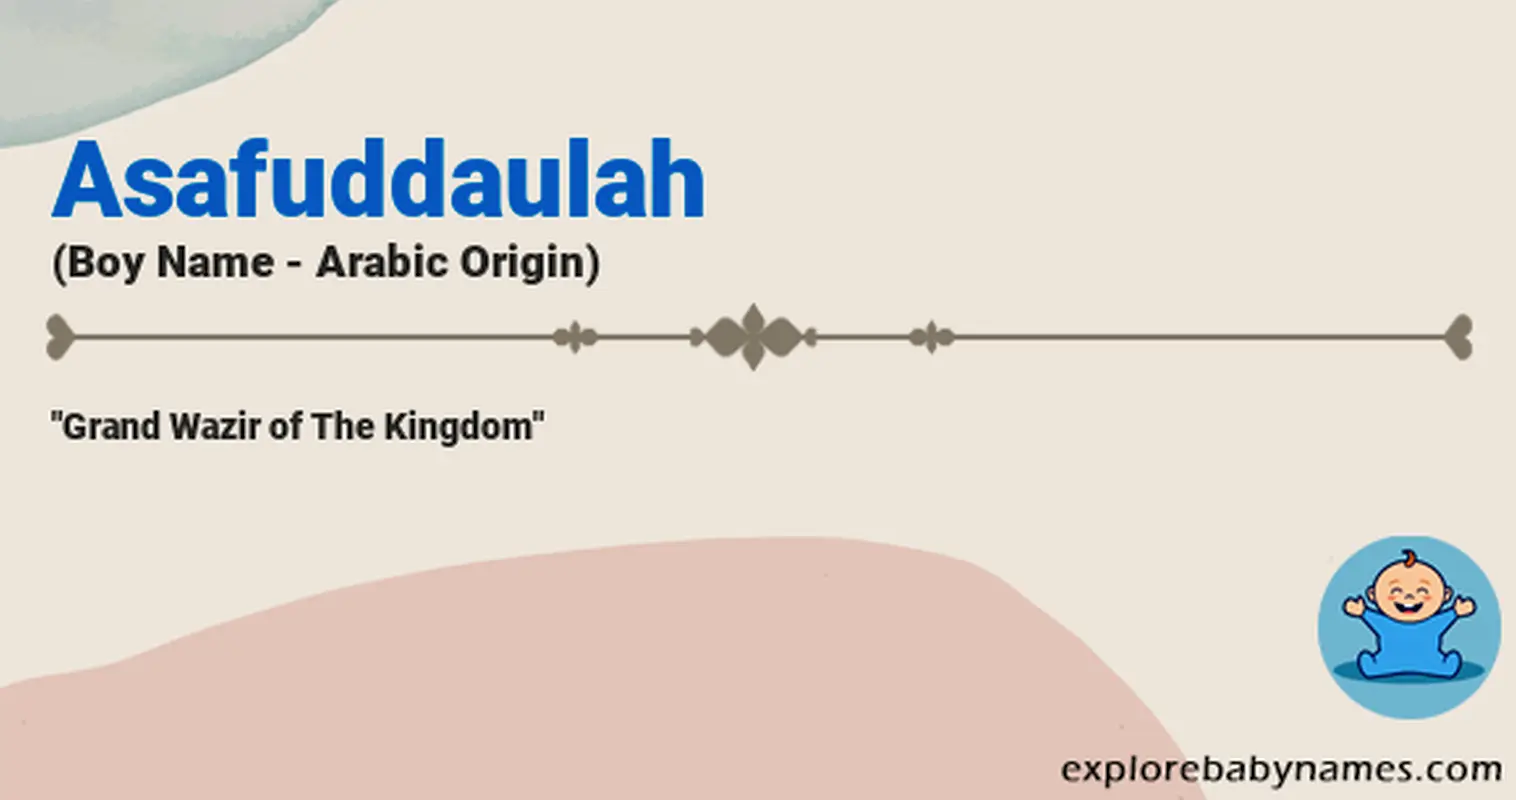 Meaning of Asafuddaulah